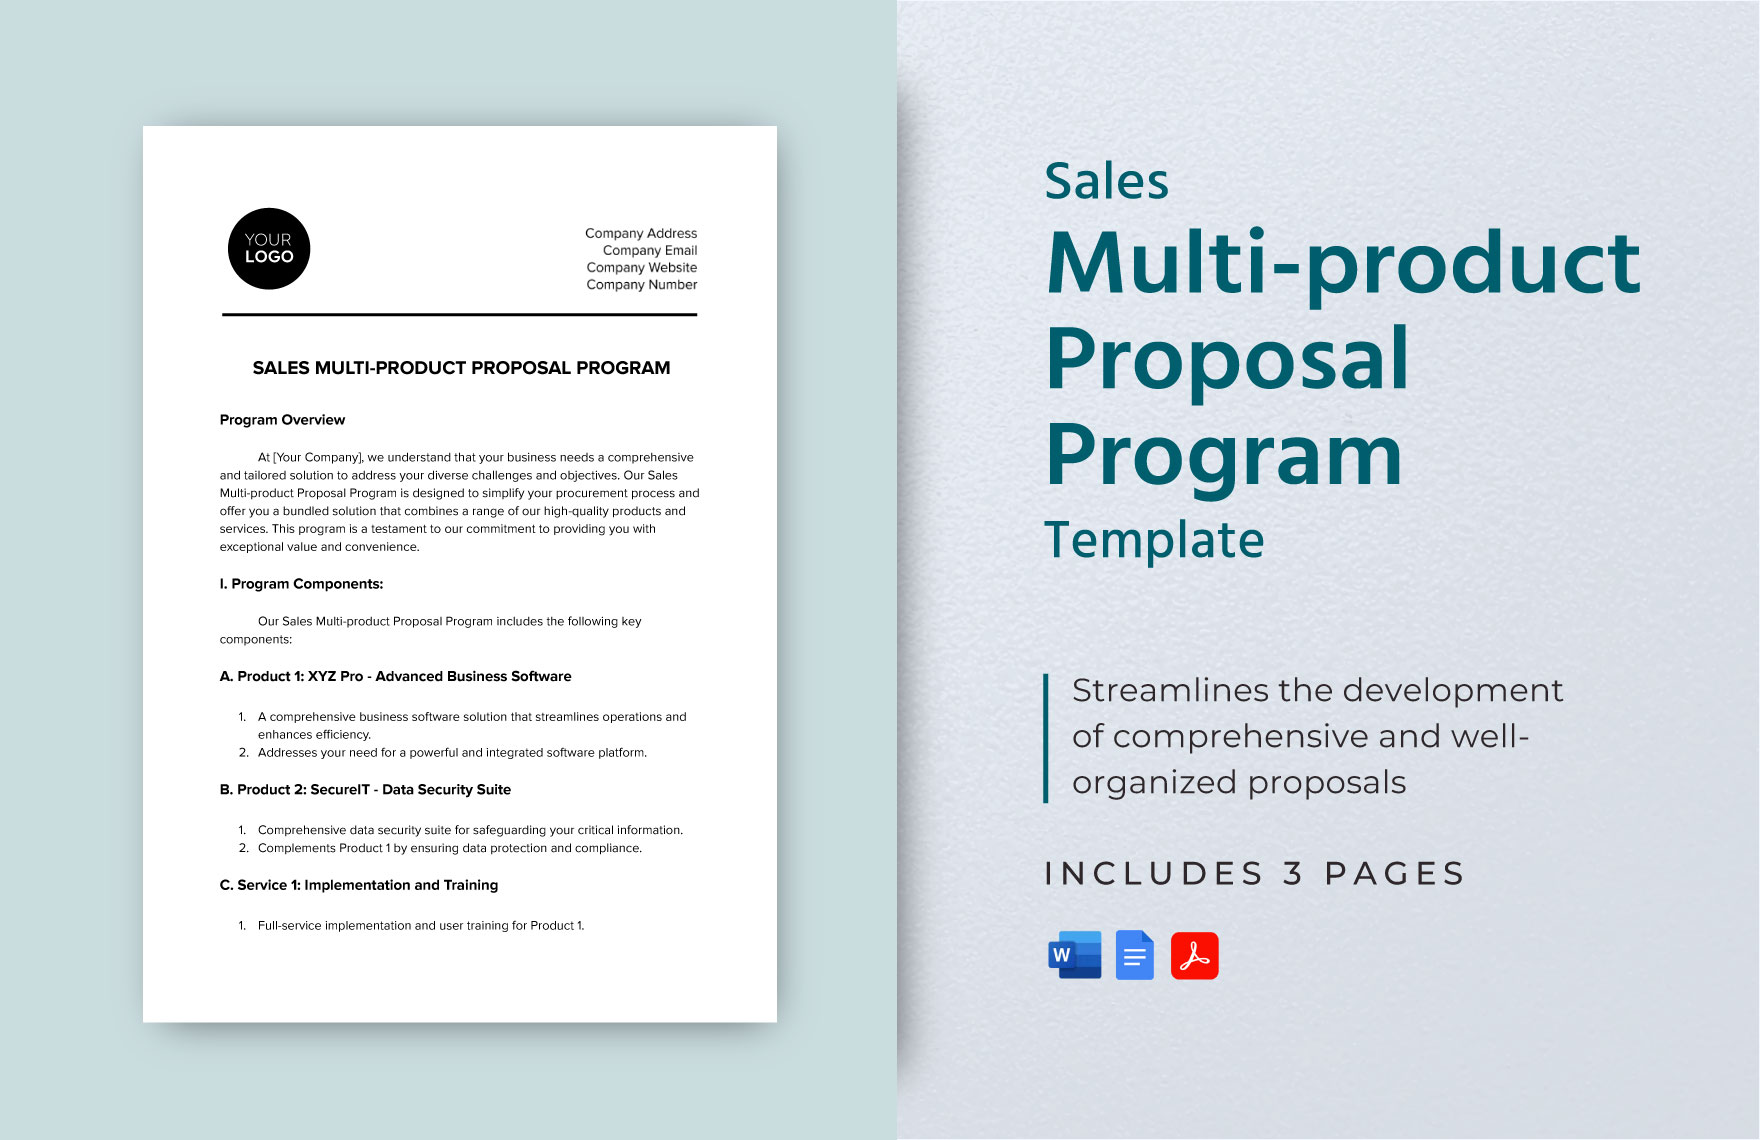 Sales Multi-product Proposal Program Template